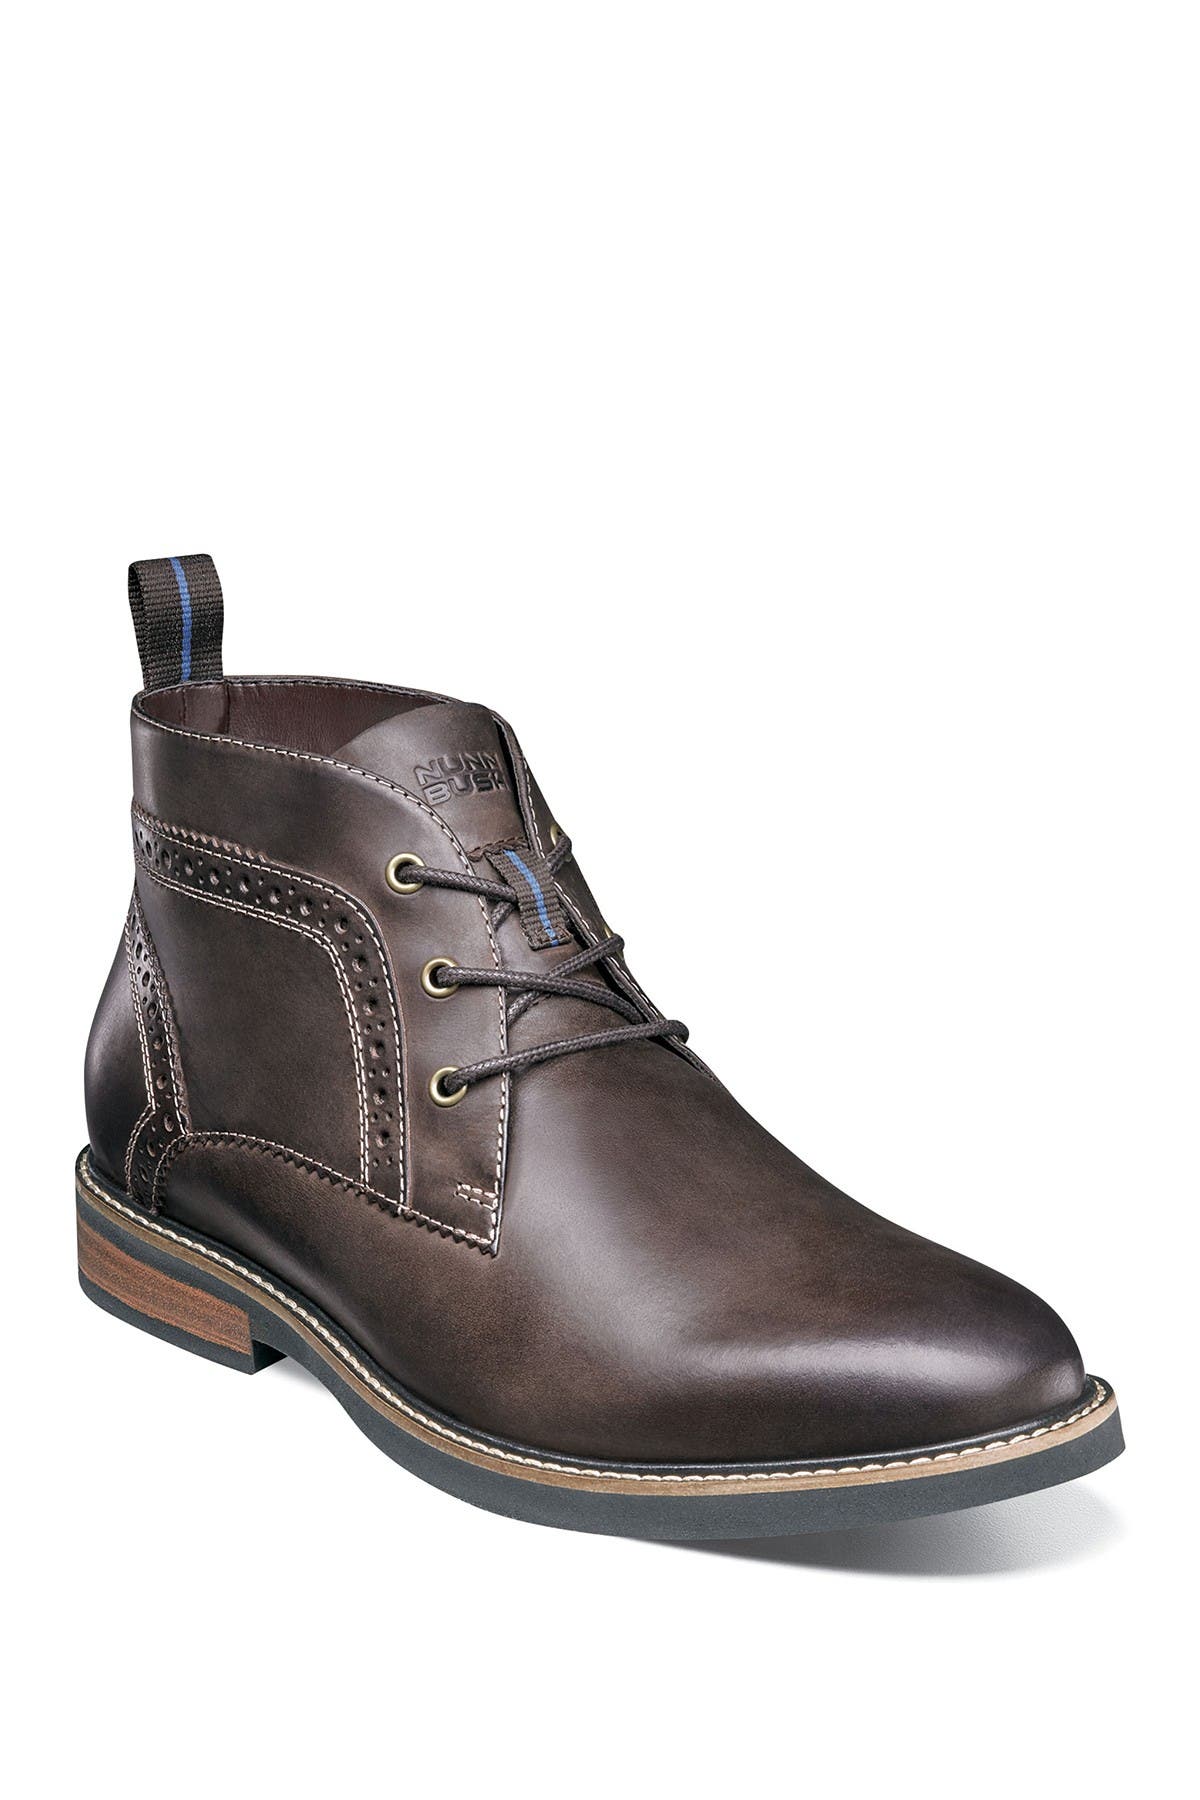 Ozark Leather Plain Toe Chukka Boot 